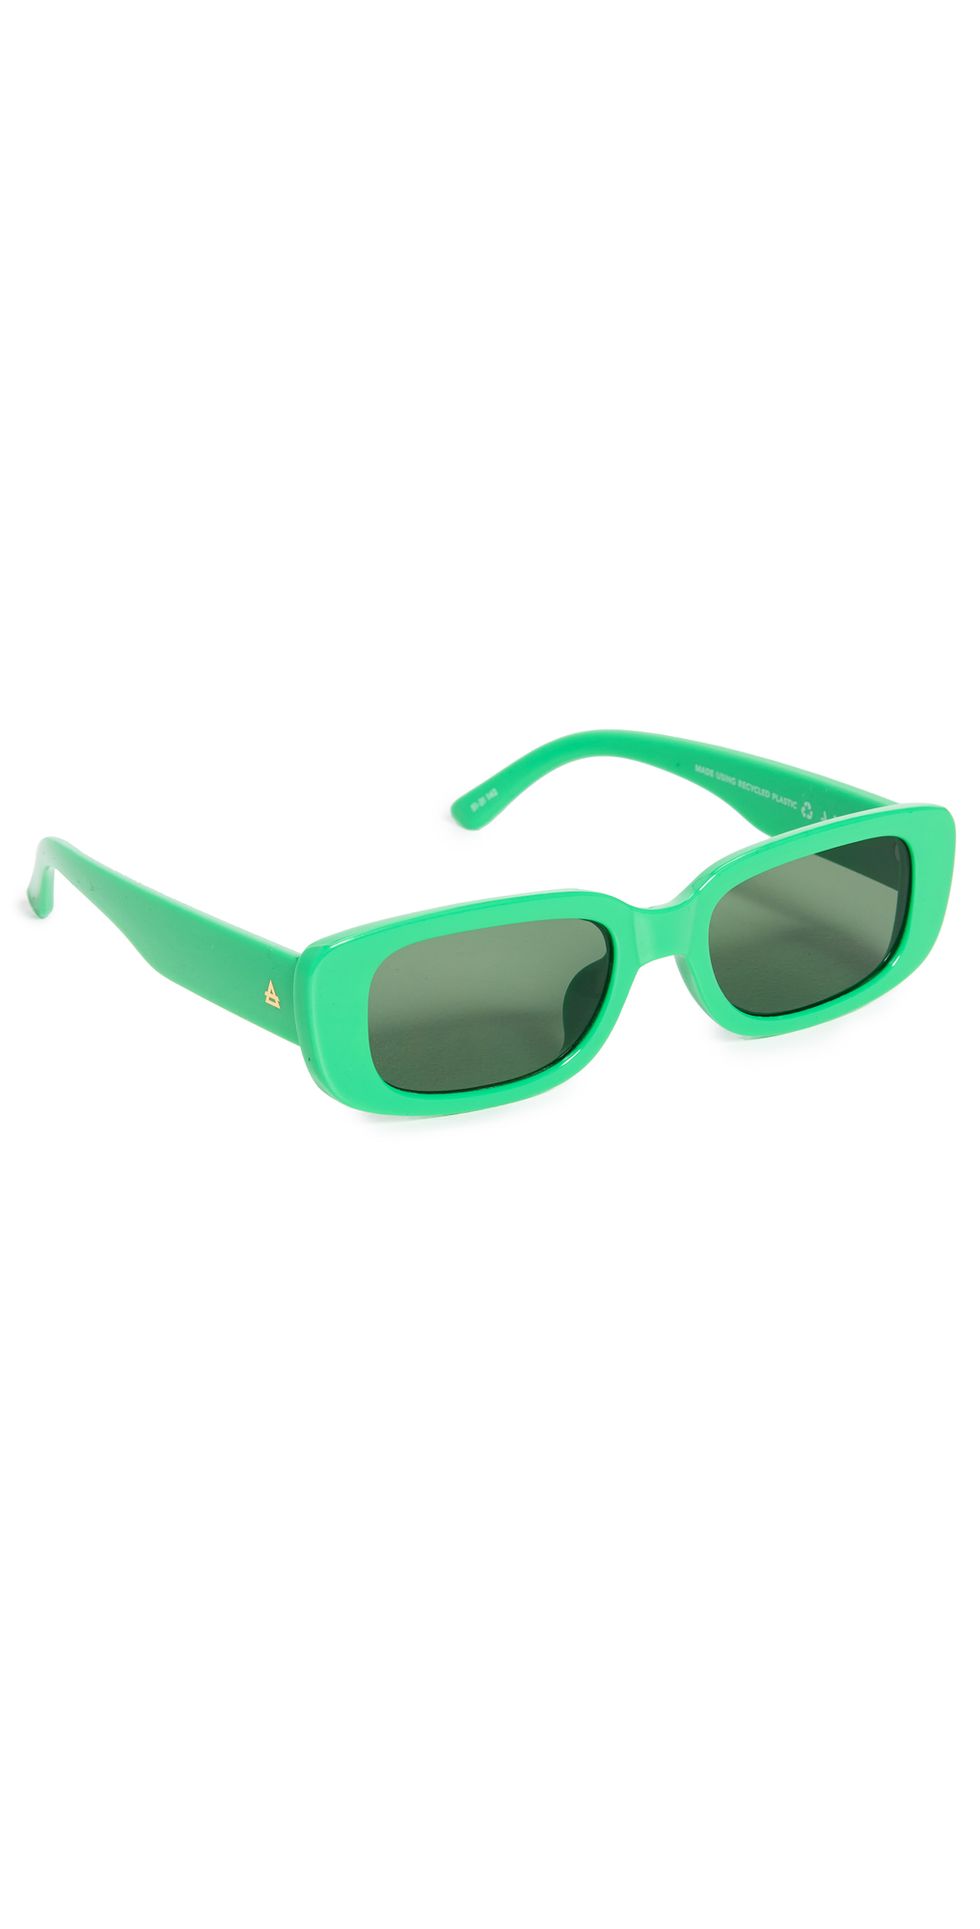 Trendy Sunglasses - Best Sunglasses